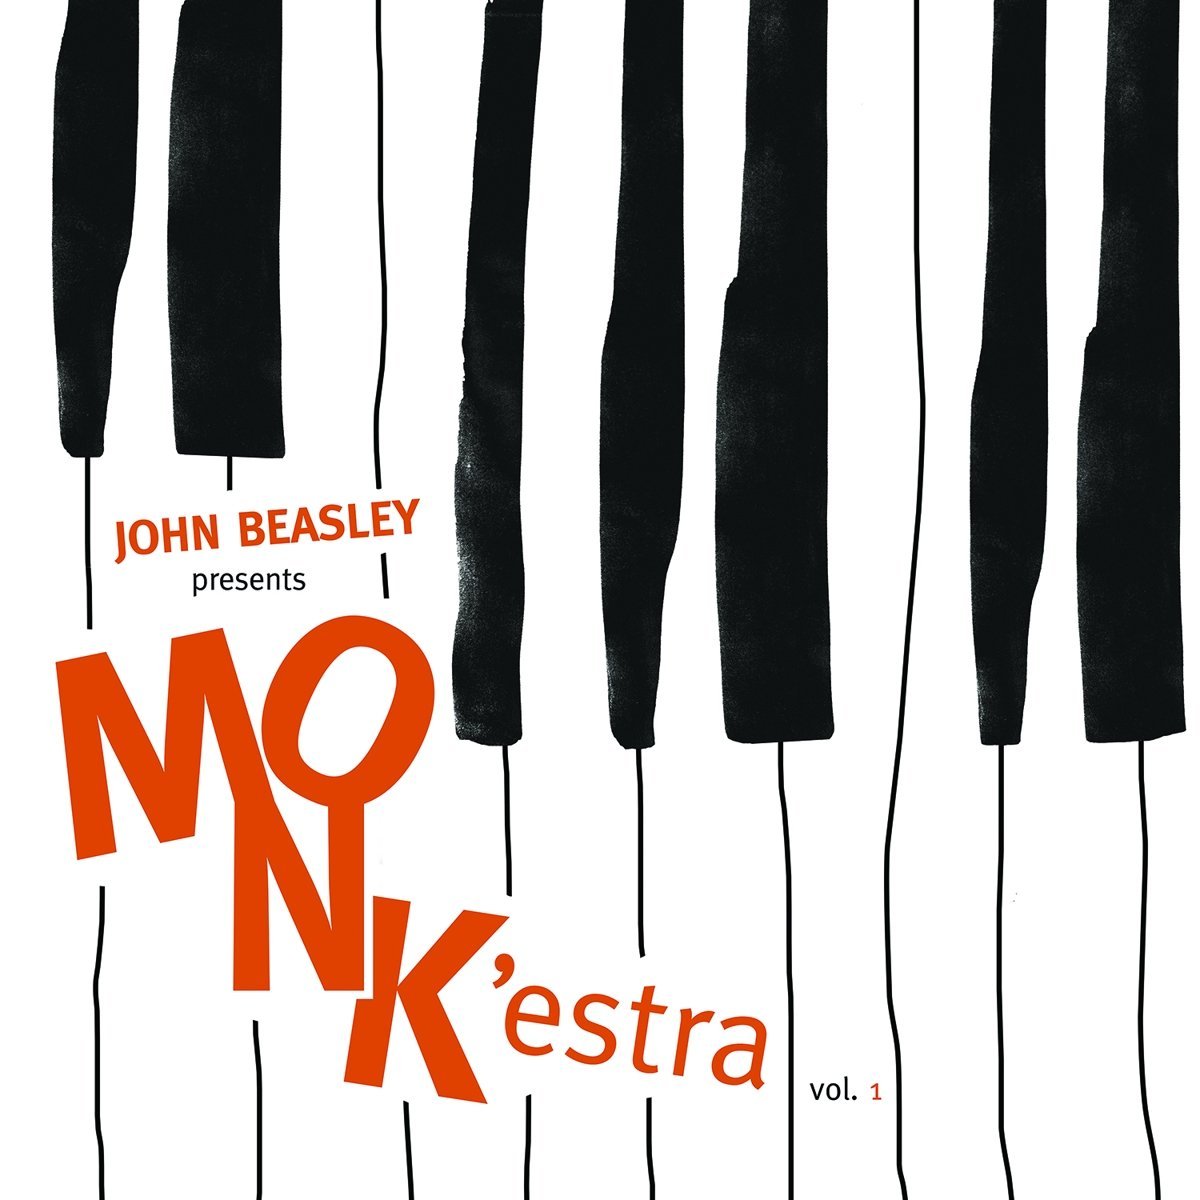 JOHN BEASLEY - Presents MONK'estra, Vol. 1 cover 